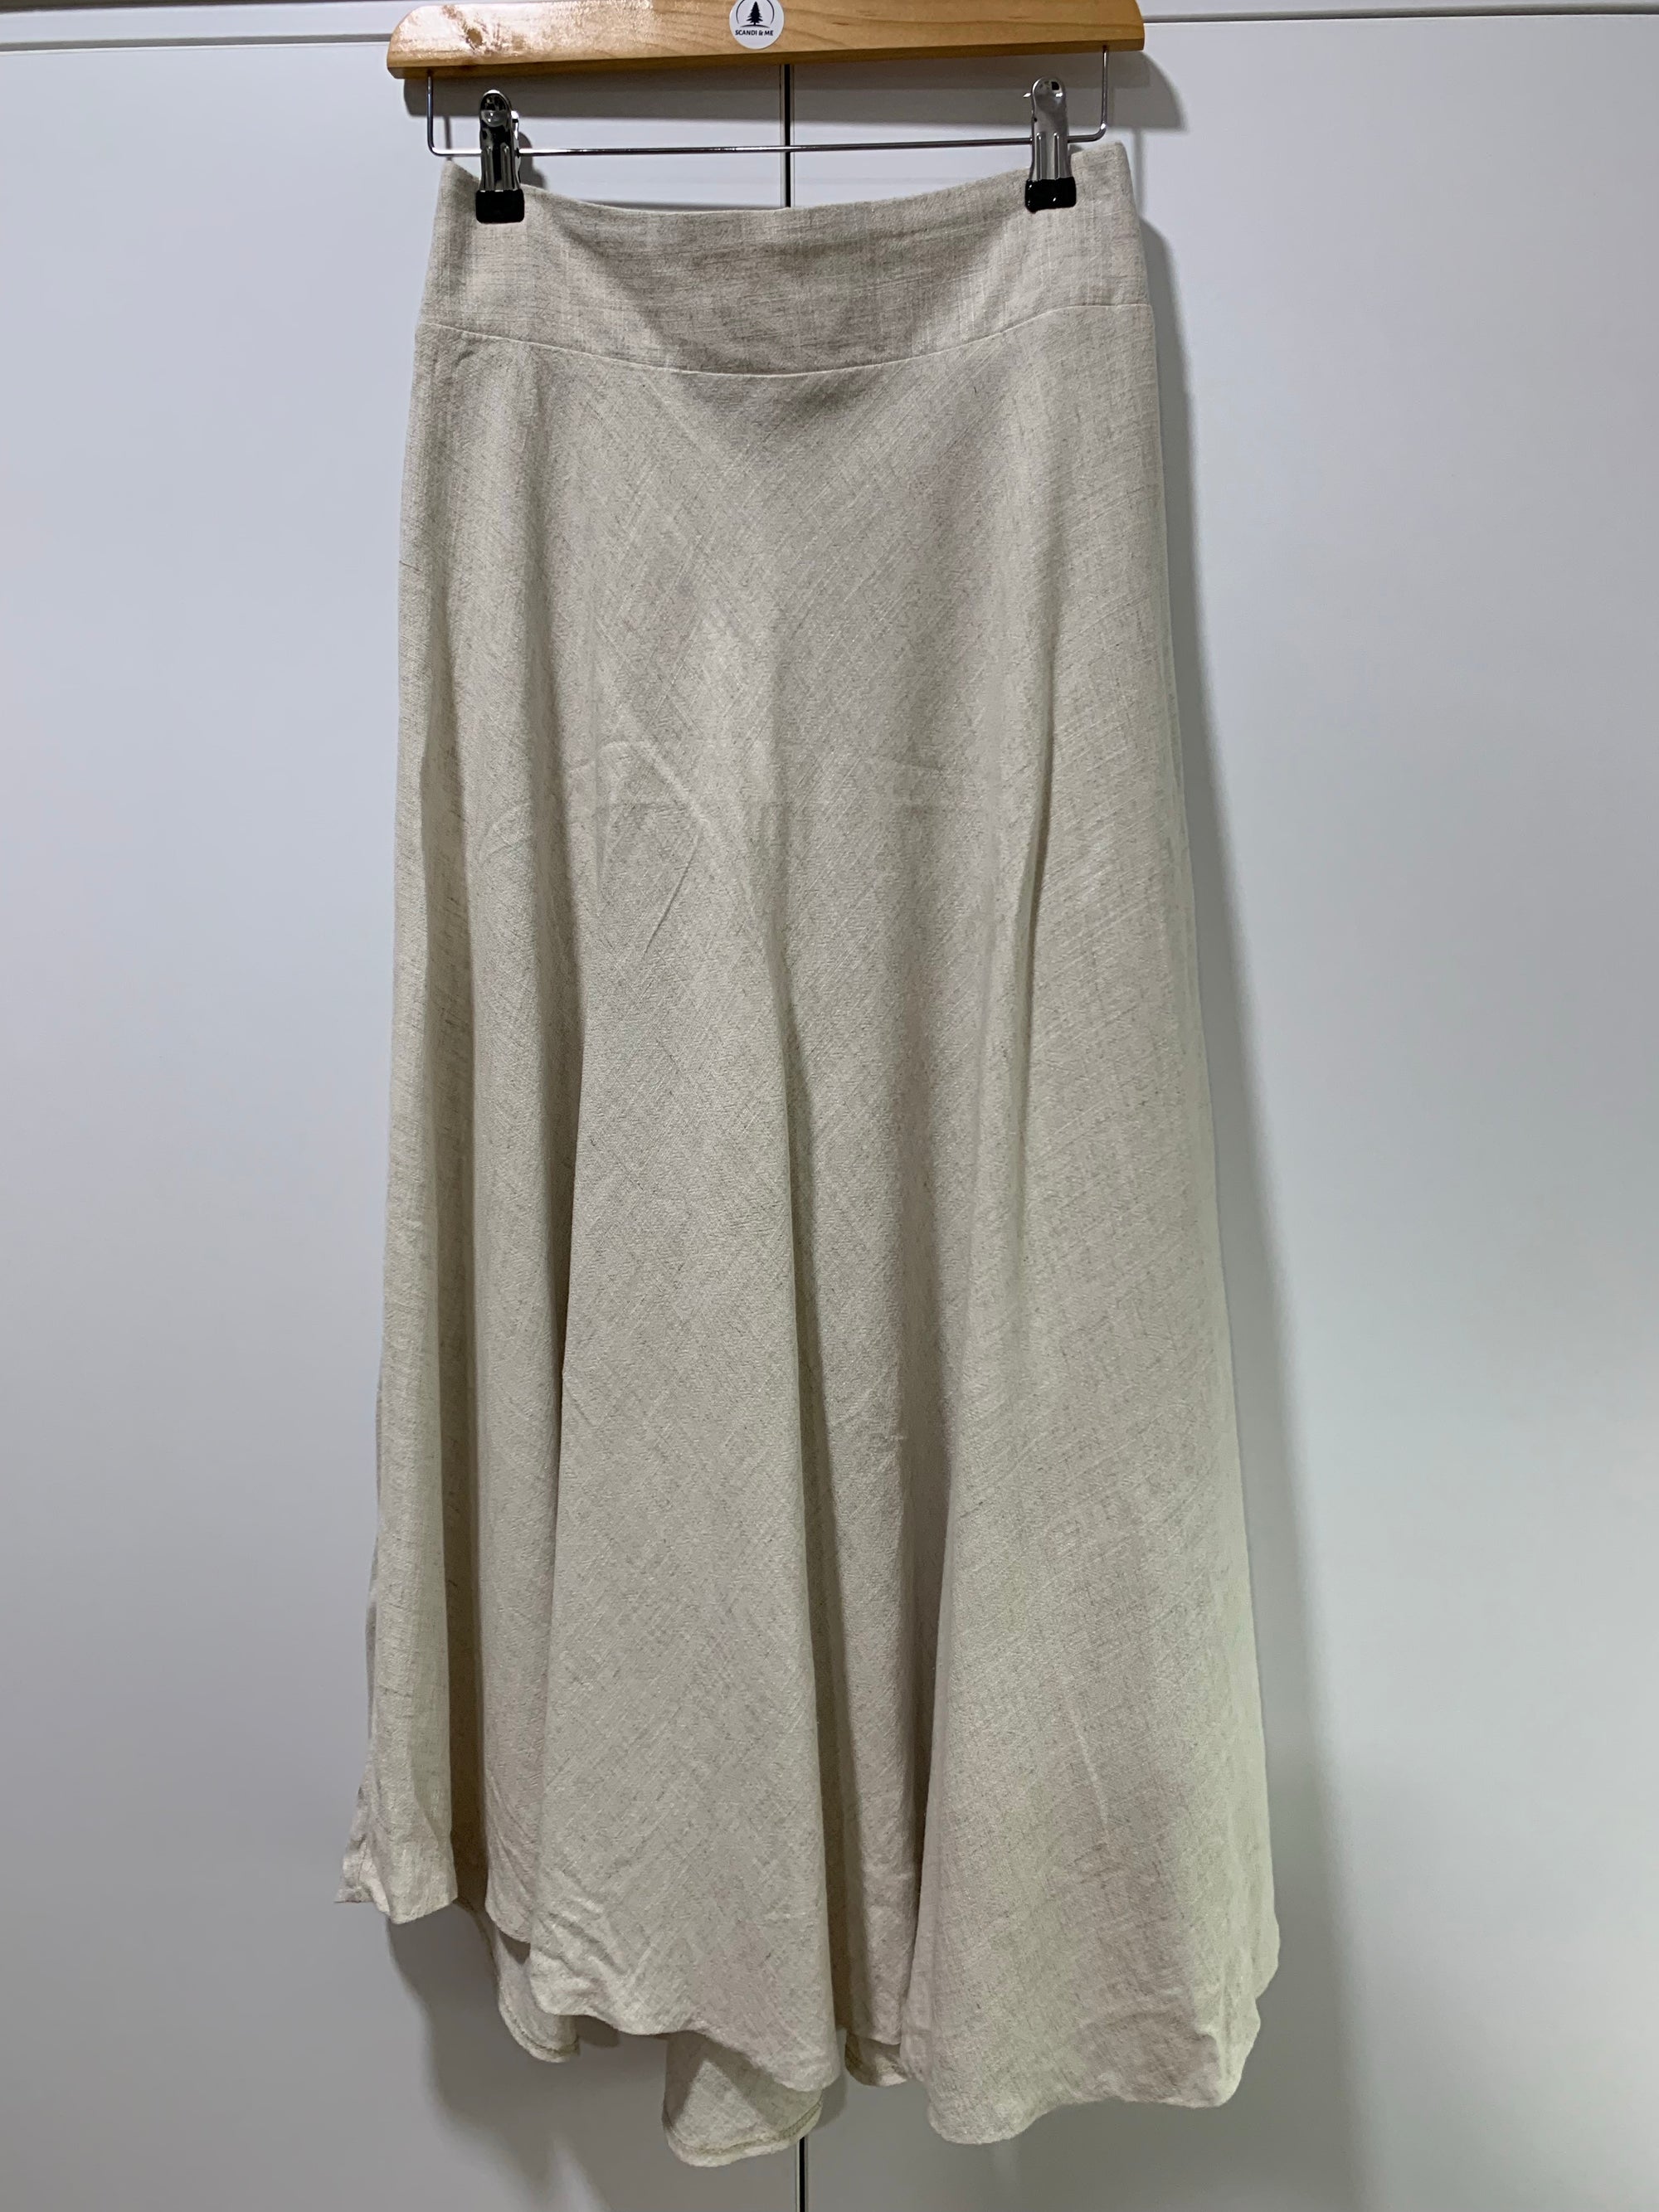 Midi Skirt in Off White Linen Blend with Elastic Waist - Willow Tree